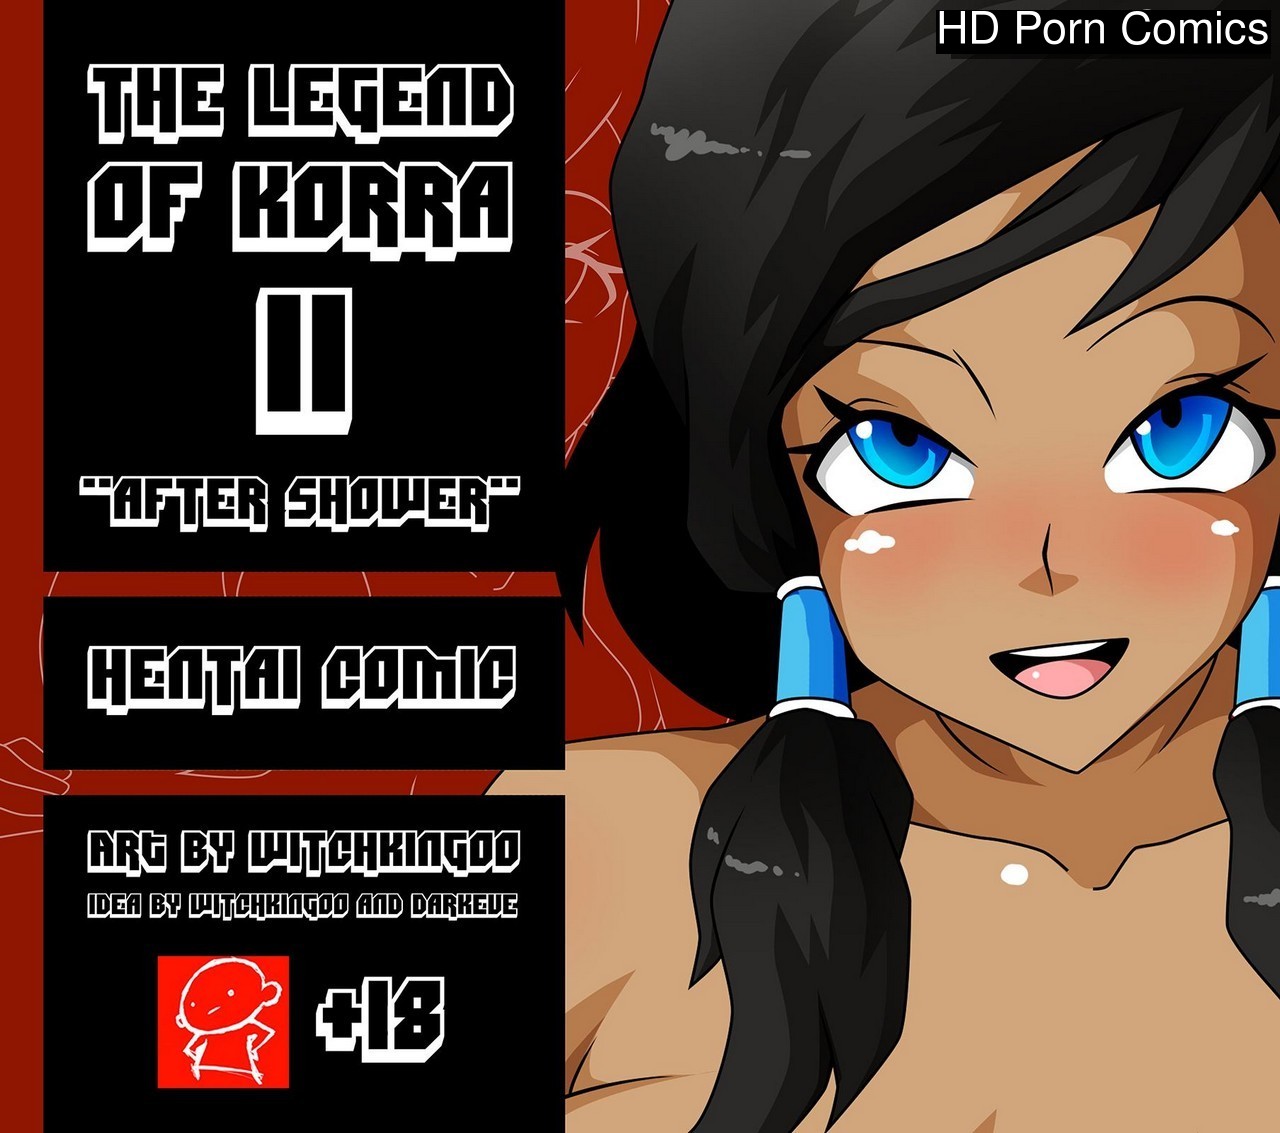 The Legend Of Korra 2 - After Shower Sex Comic | HD Porn Comics